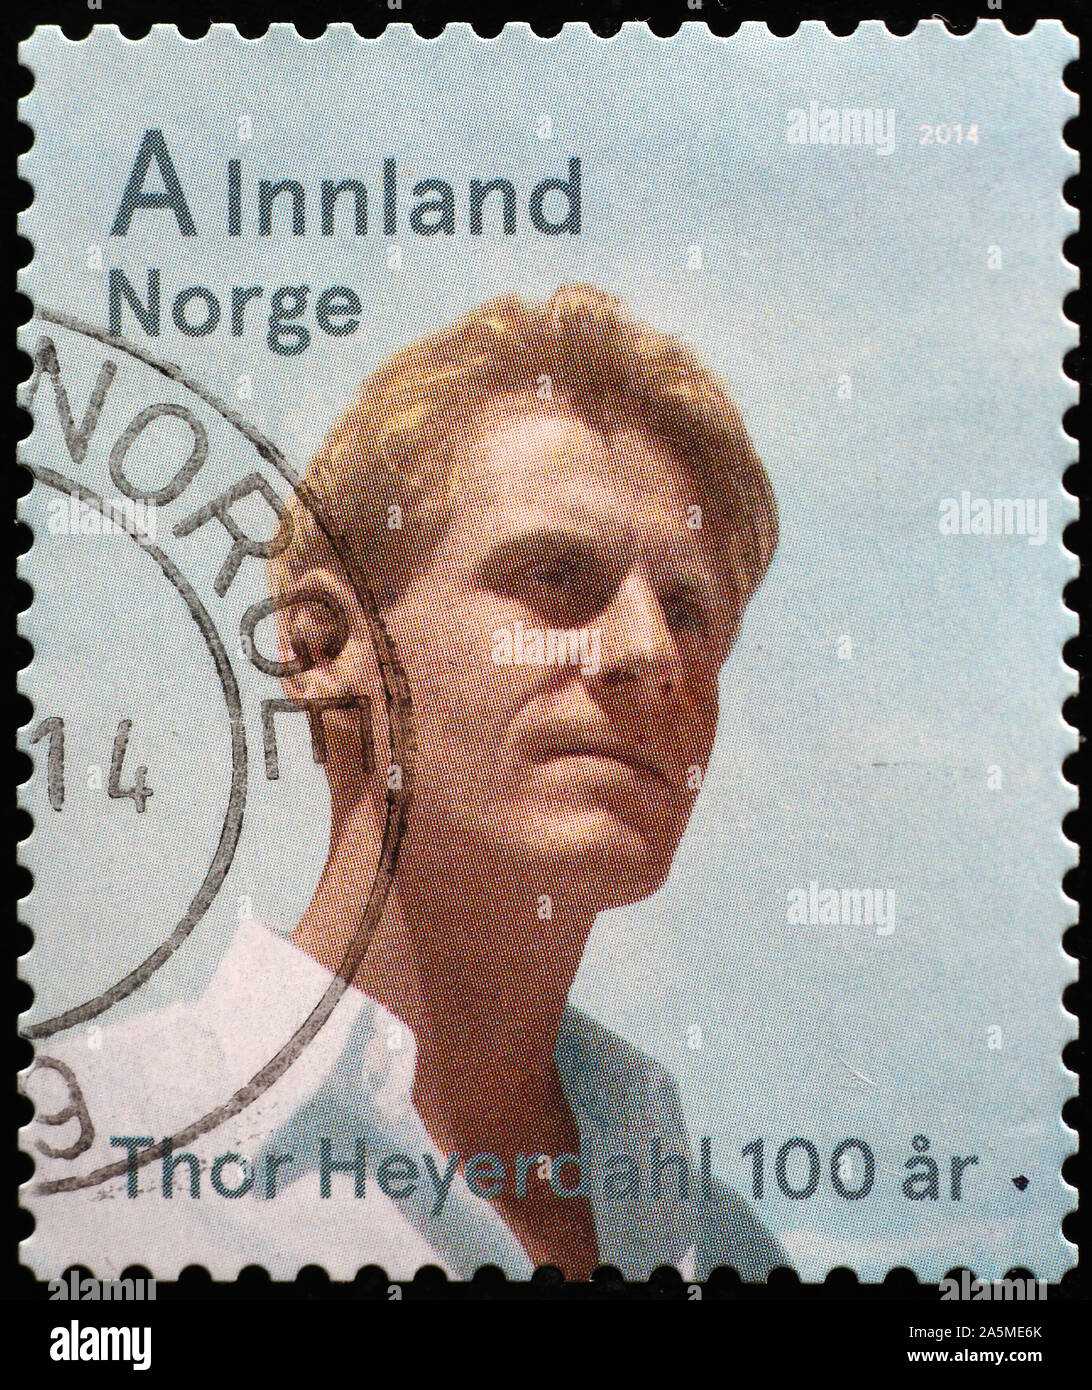 Thor Heyerdahl on norwegian postage stamp Stock Photo